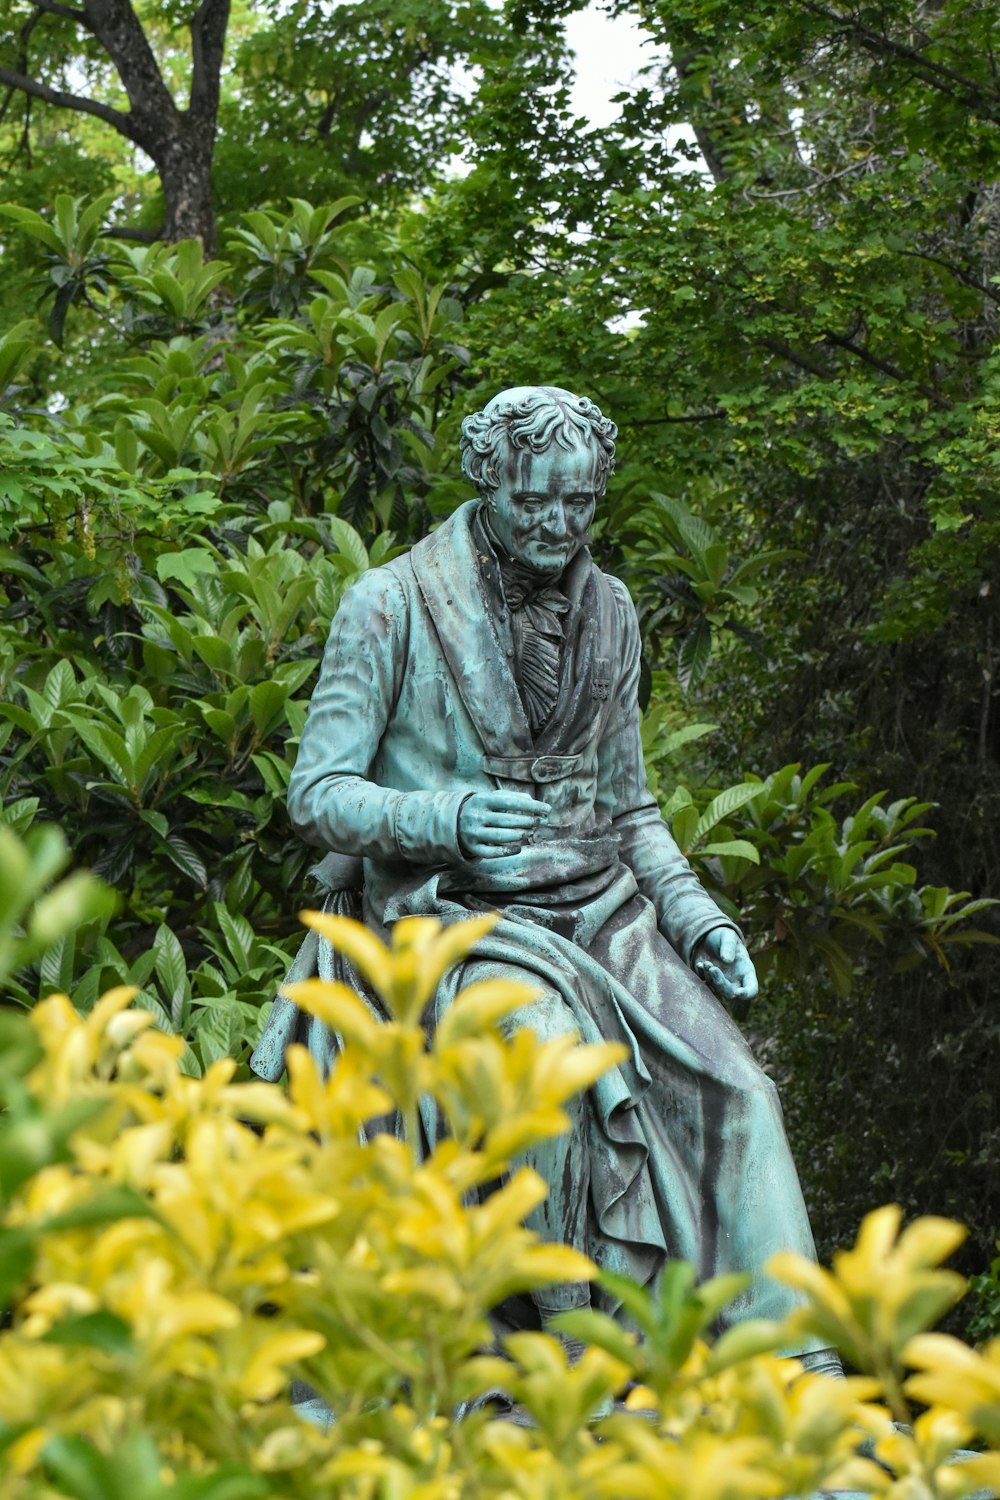 a statue of a man in a garden